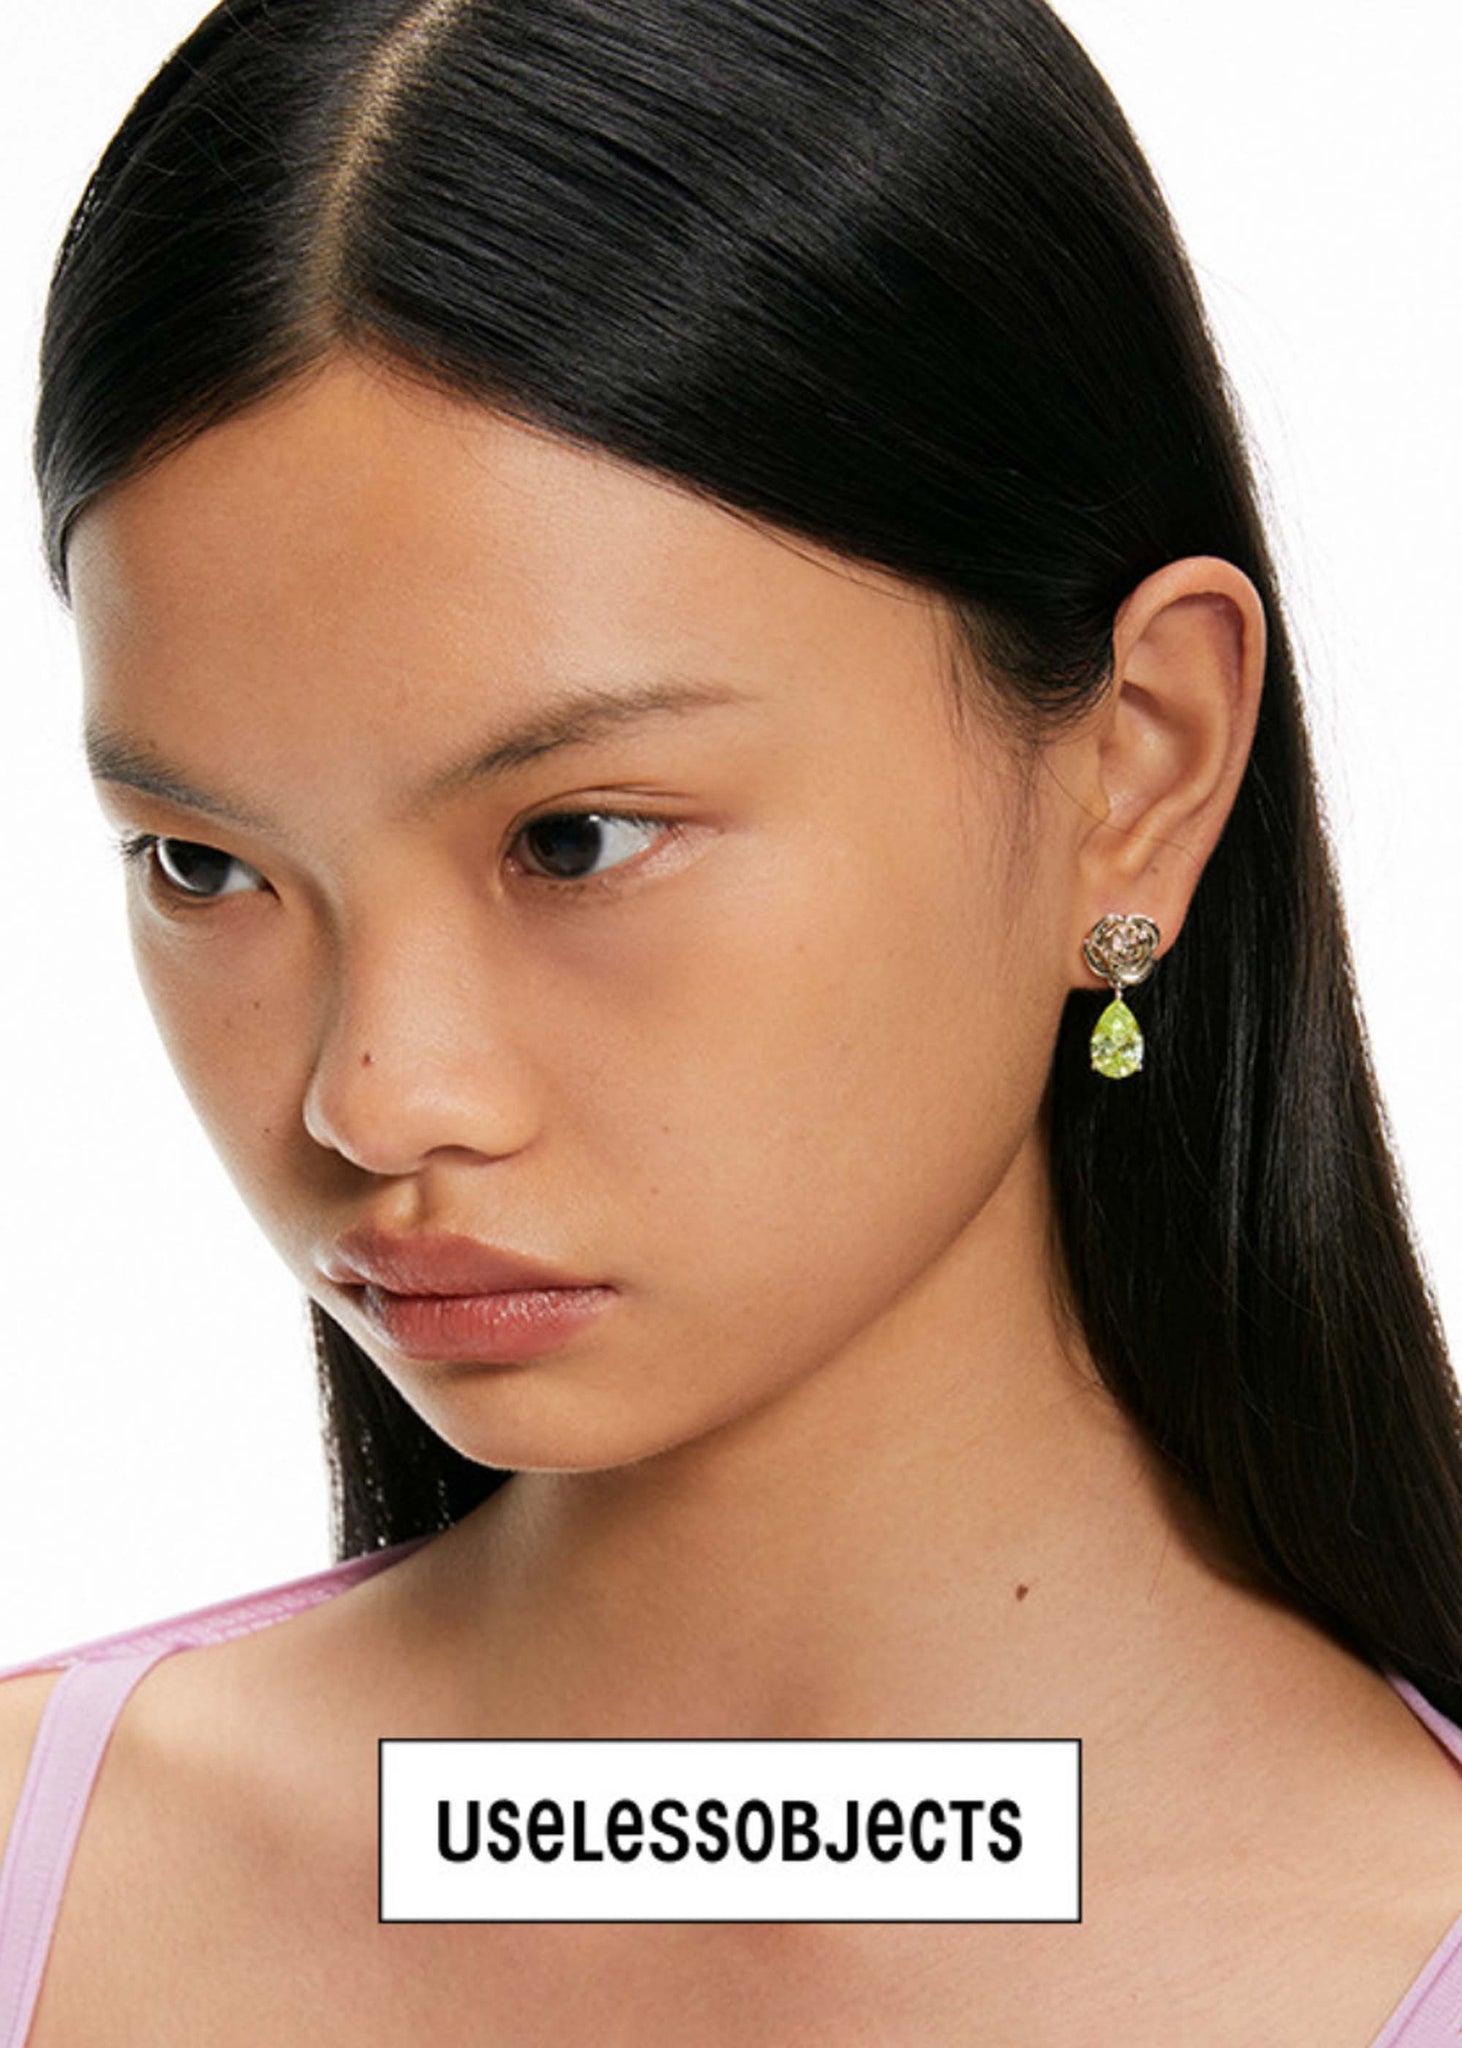 Gold & Green Rose Diamond Earring Pair